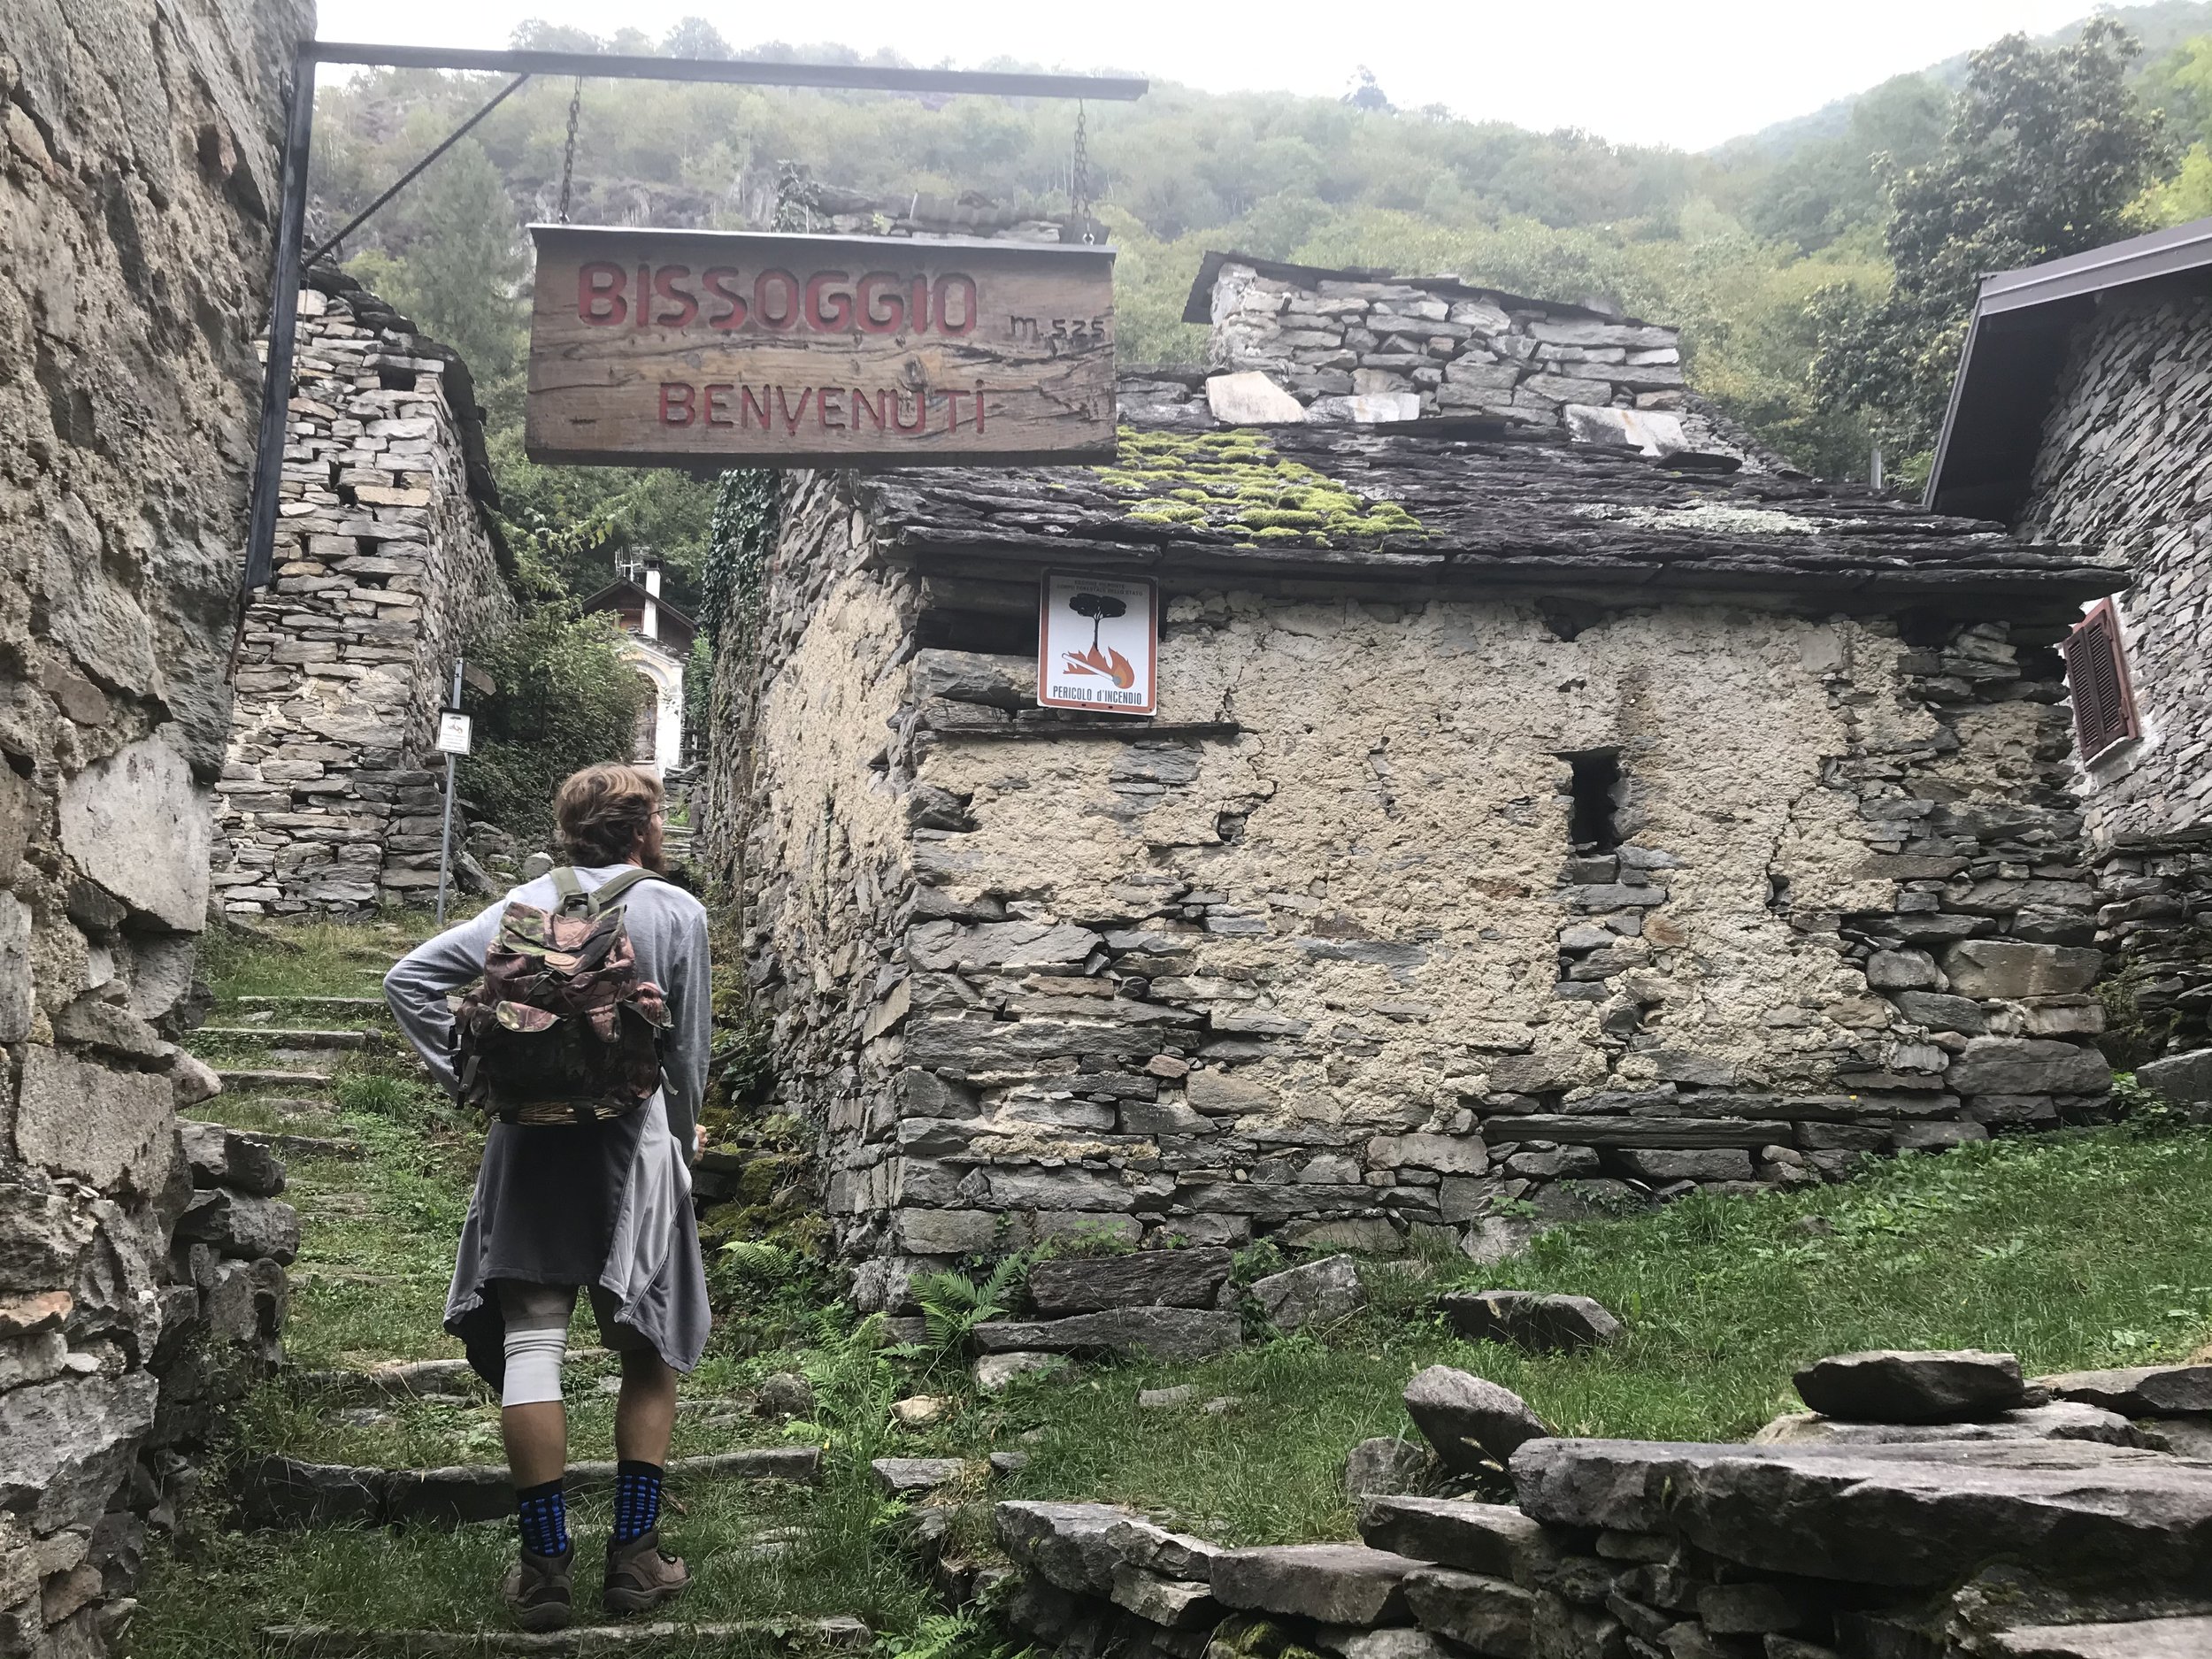 The 'Fungiatt' Northern Italy's Mushroom-Mad Mountain Men 